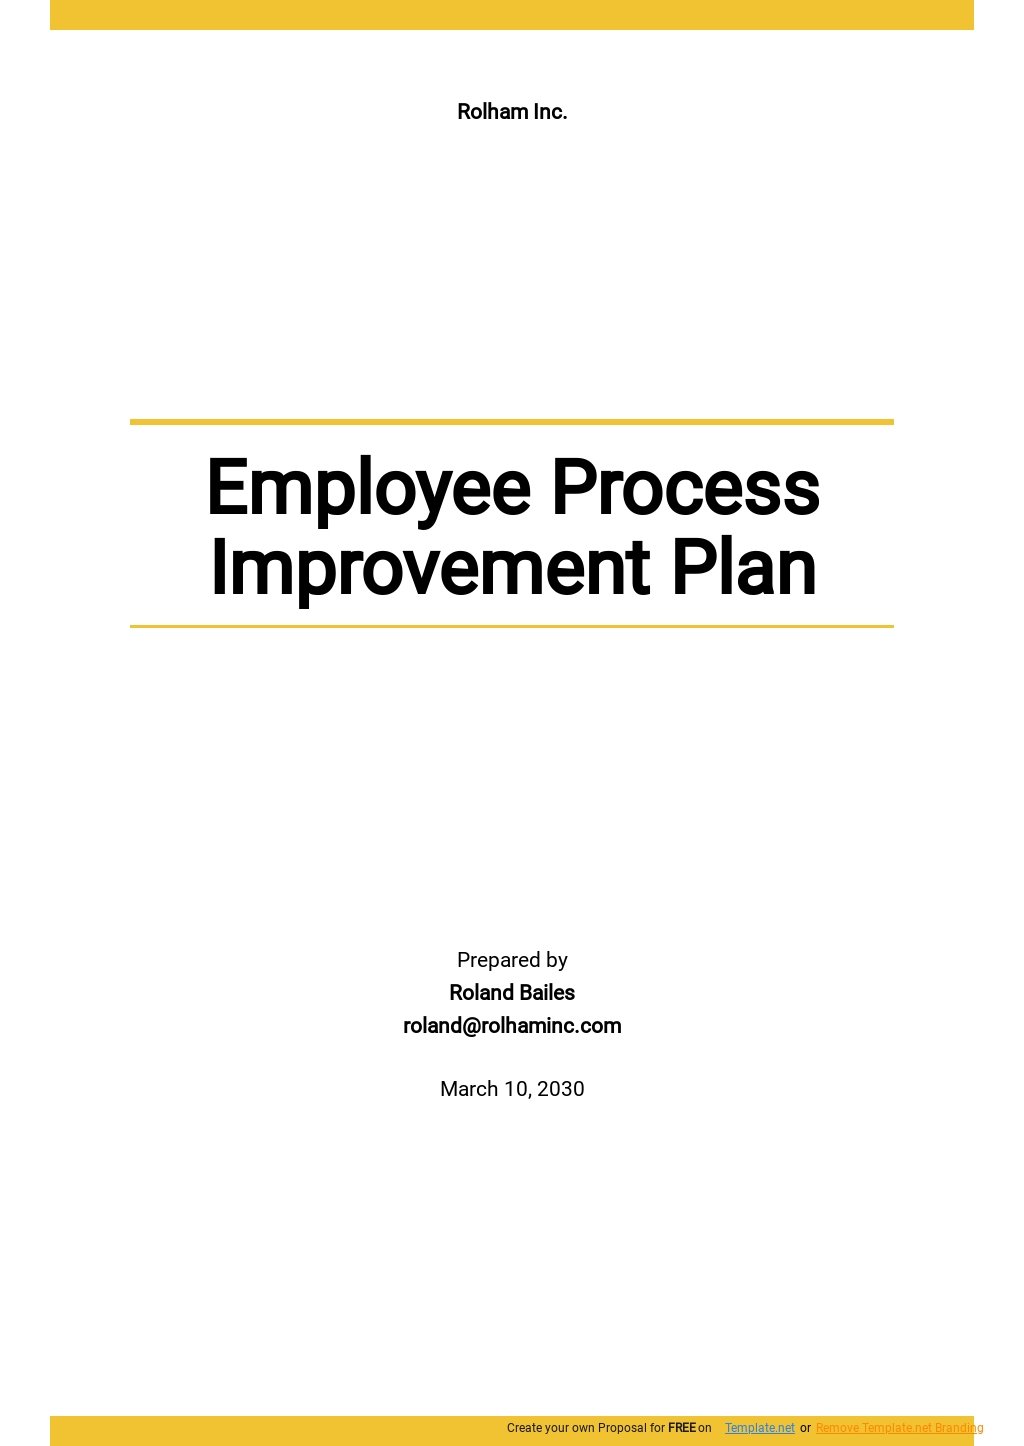 Sample Employee Process Improvement Plan Template.jpe